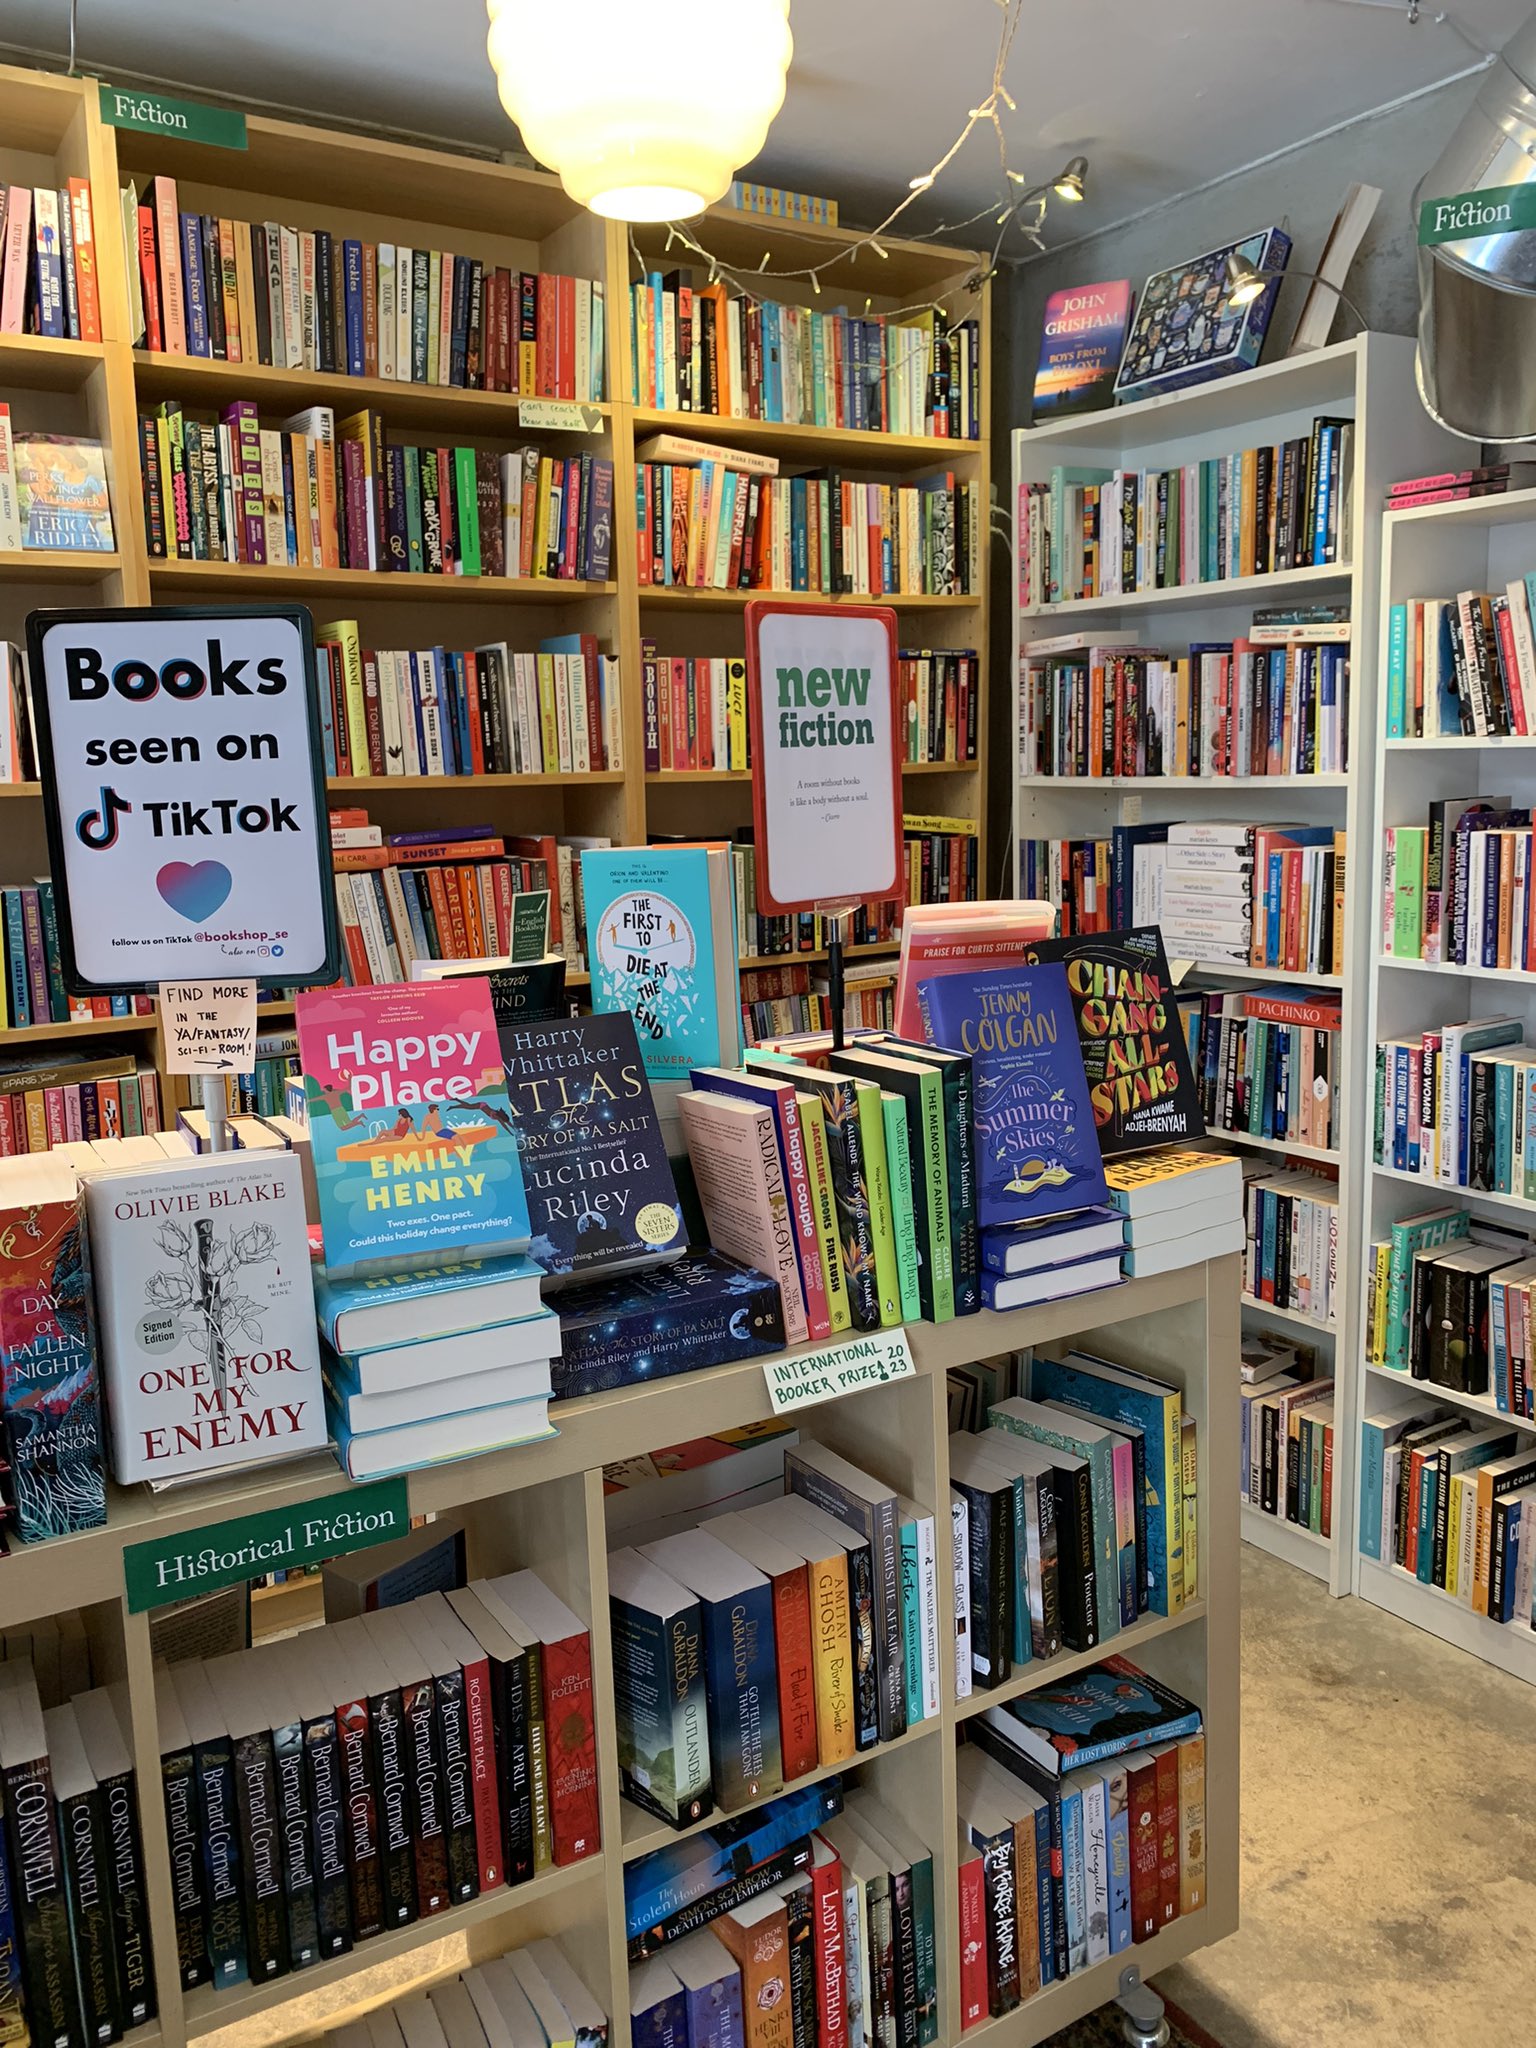 The English Bookshop Stockholm